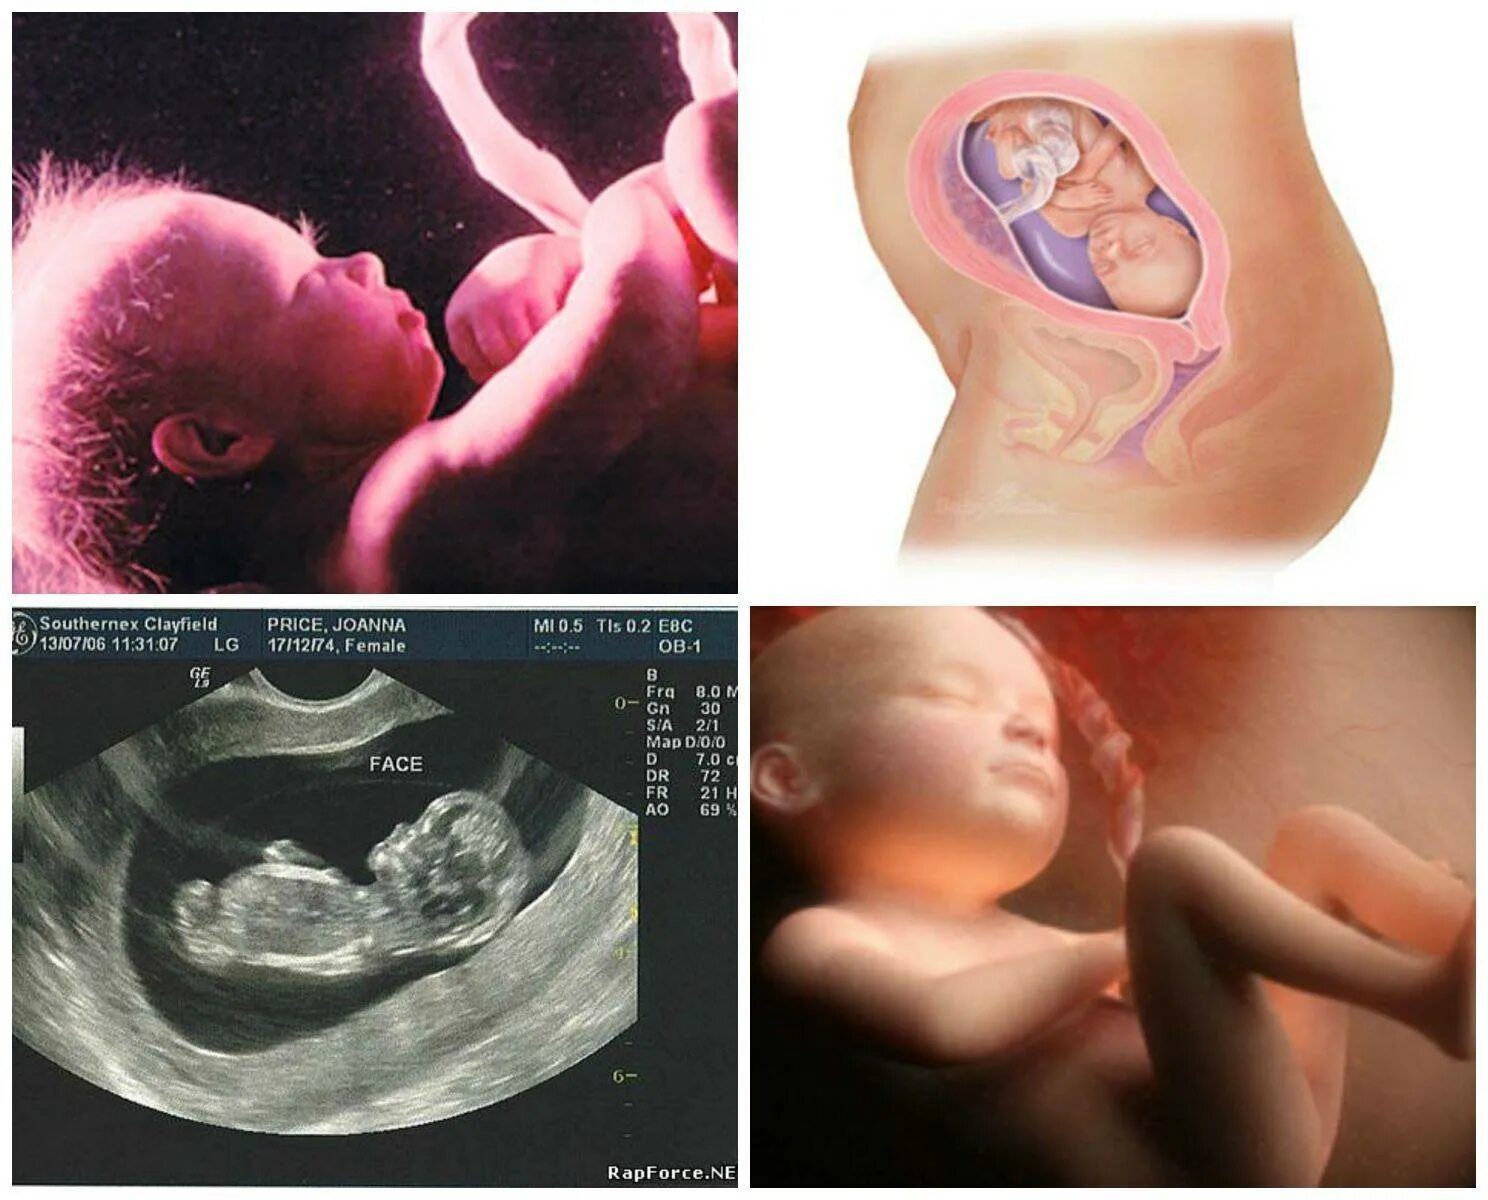 27 Неделя беременности фото плода. Ребенок на 26 неделе беременности УЗИ. 26 Неделя беременности фото плода. Беременность 26-27 недель фото плода. Ребенок в животе 25 недель